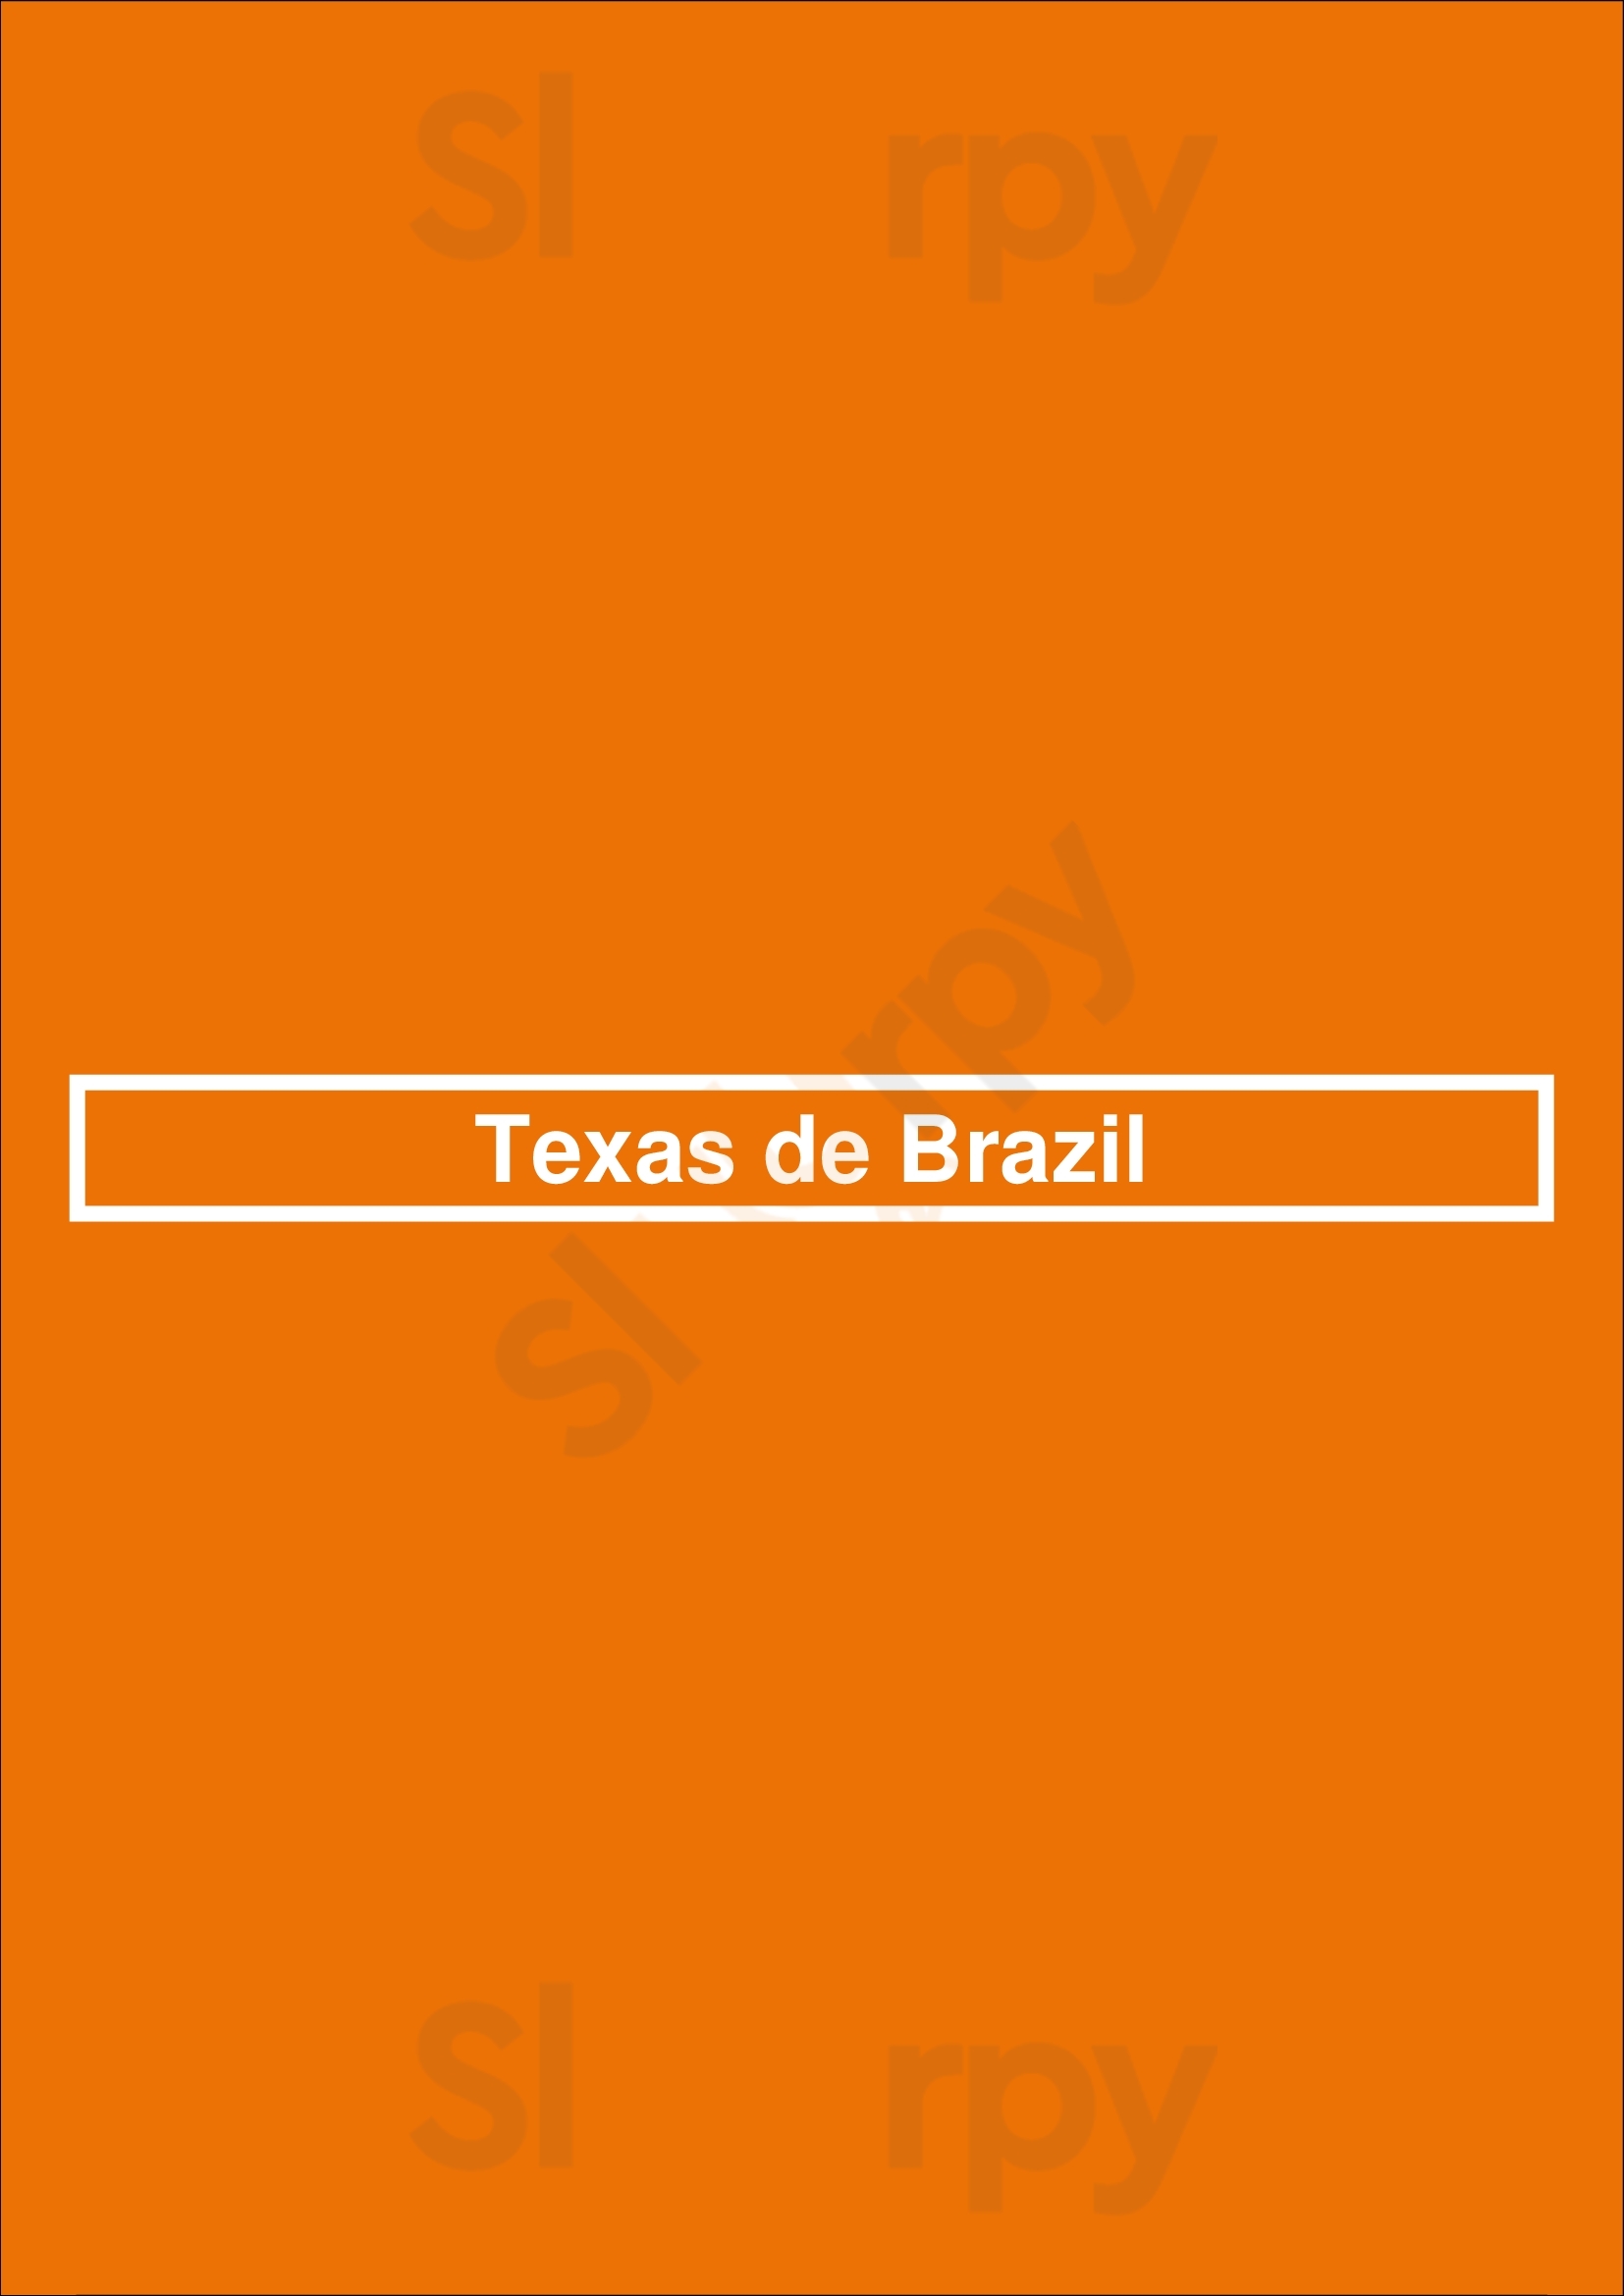 Texas De Brazil Mobile Menu - 1